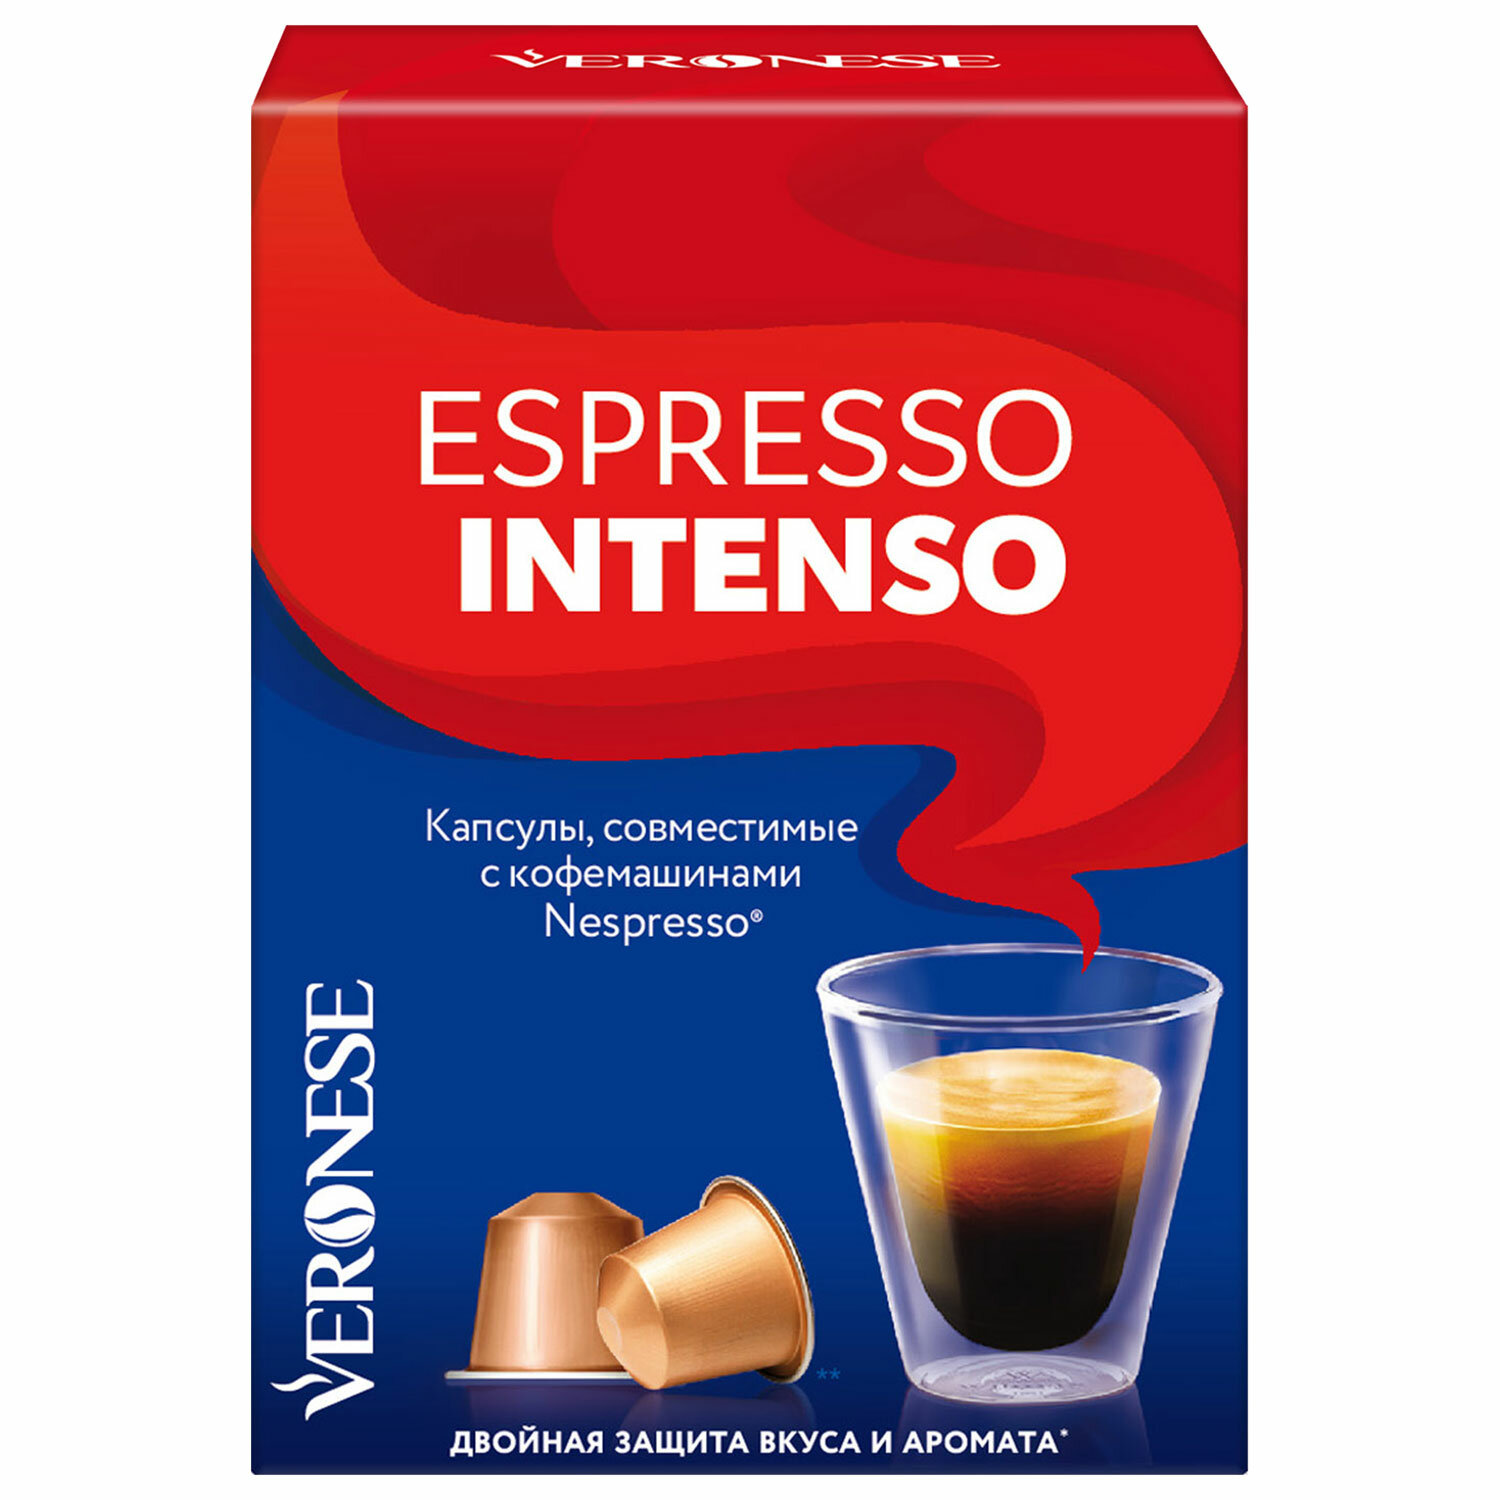 Кофе VERONESE Espresso Intenso для кофемашин Nespresso, 10 порций